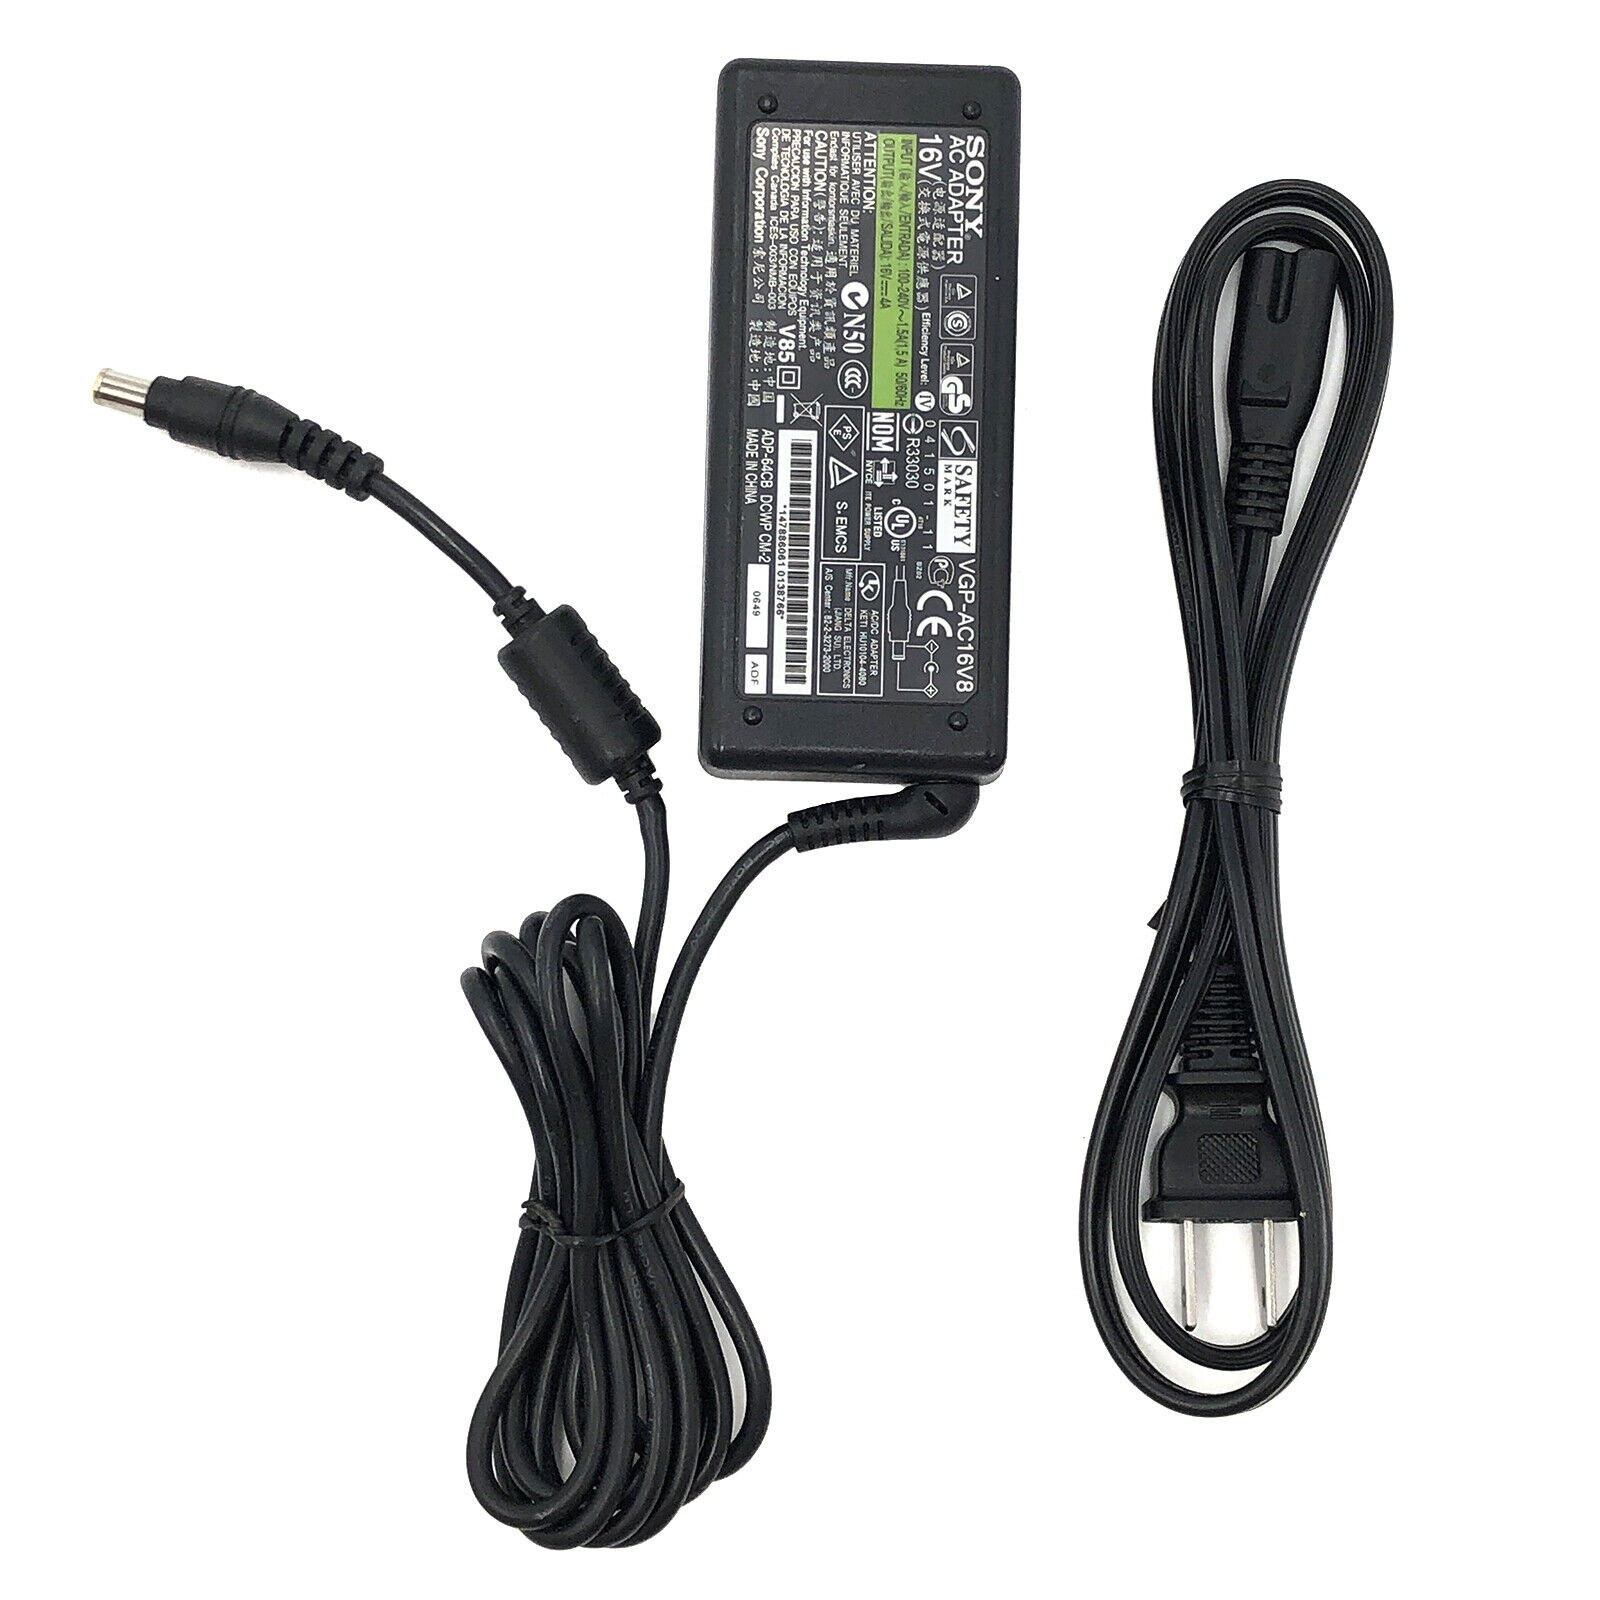 NEW Genuine Sony VGP-AC16V8 AC Power Supply Adapter for Sony VAIO W/Cord